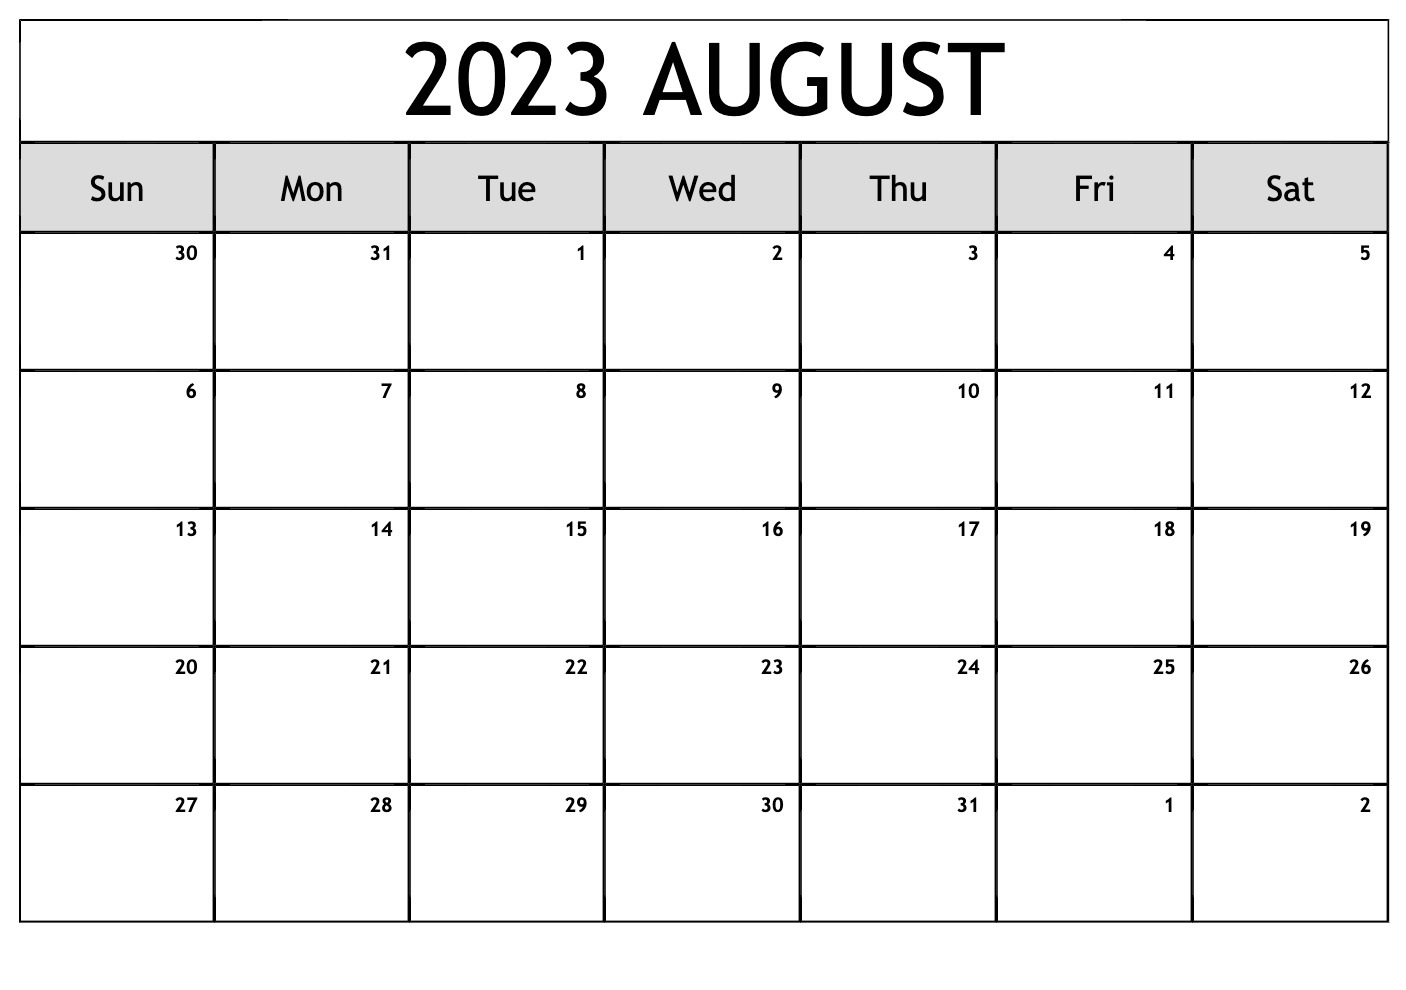 August 2023 Calendar With Holidays